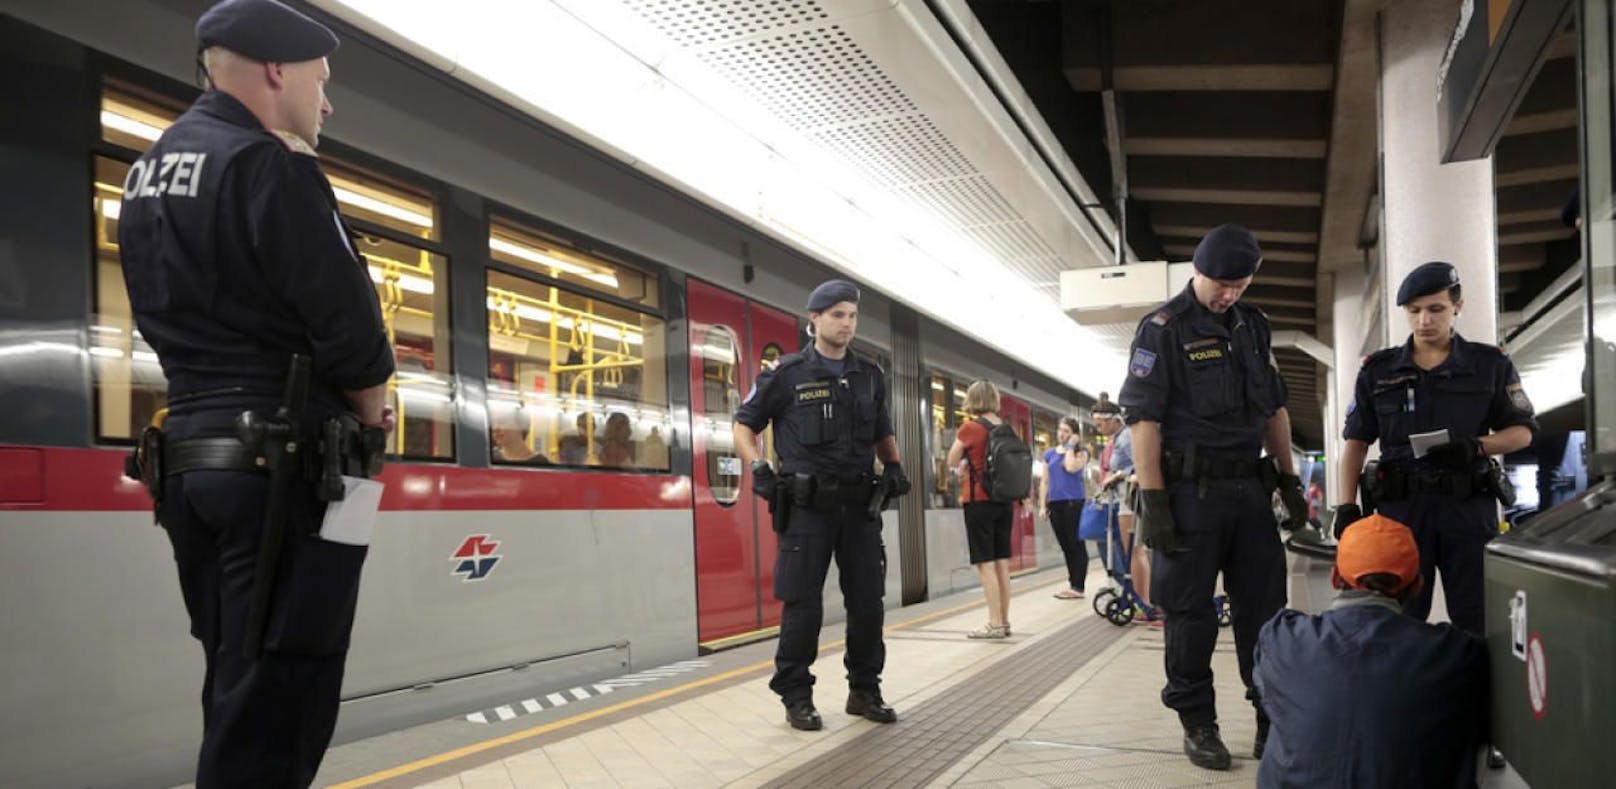 Messerangriff bei Wiener U-Bahnstation – Täter flüchtig